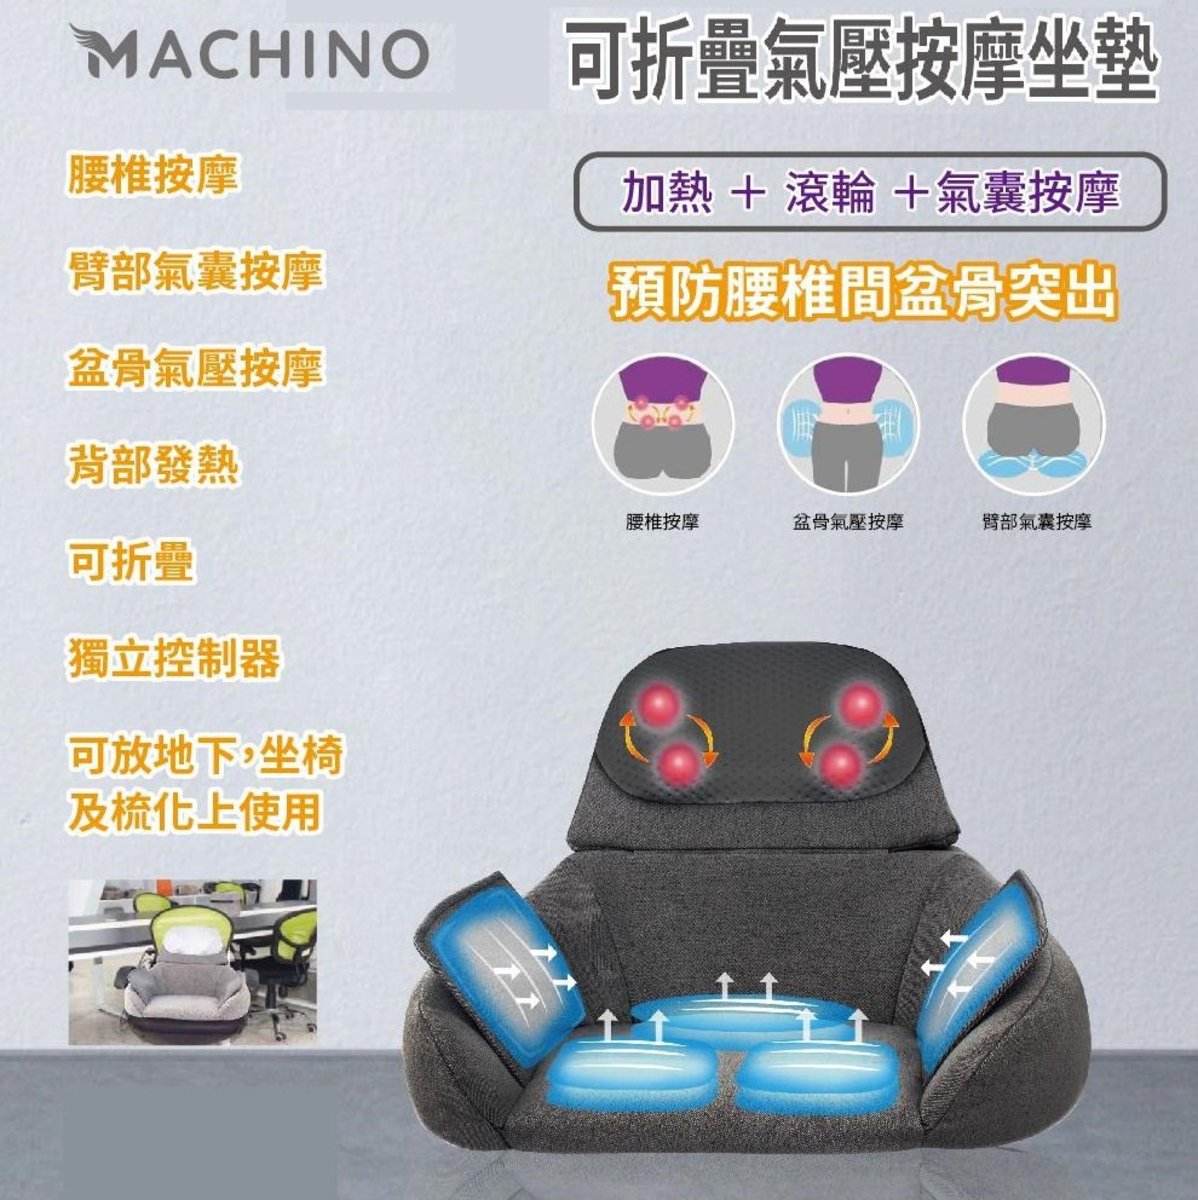 Machino - Folding Air Bag Massage Cushion [Licensed in Hong Kong]